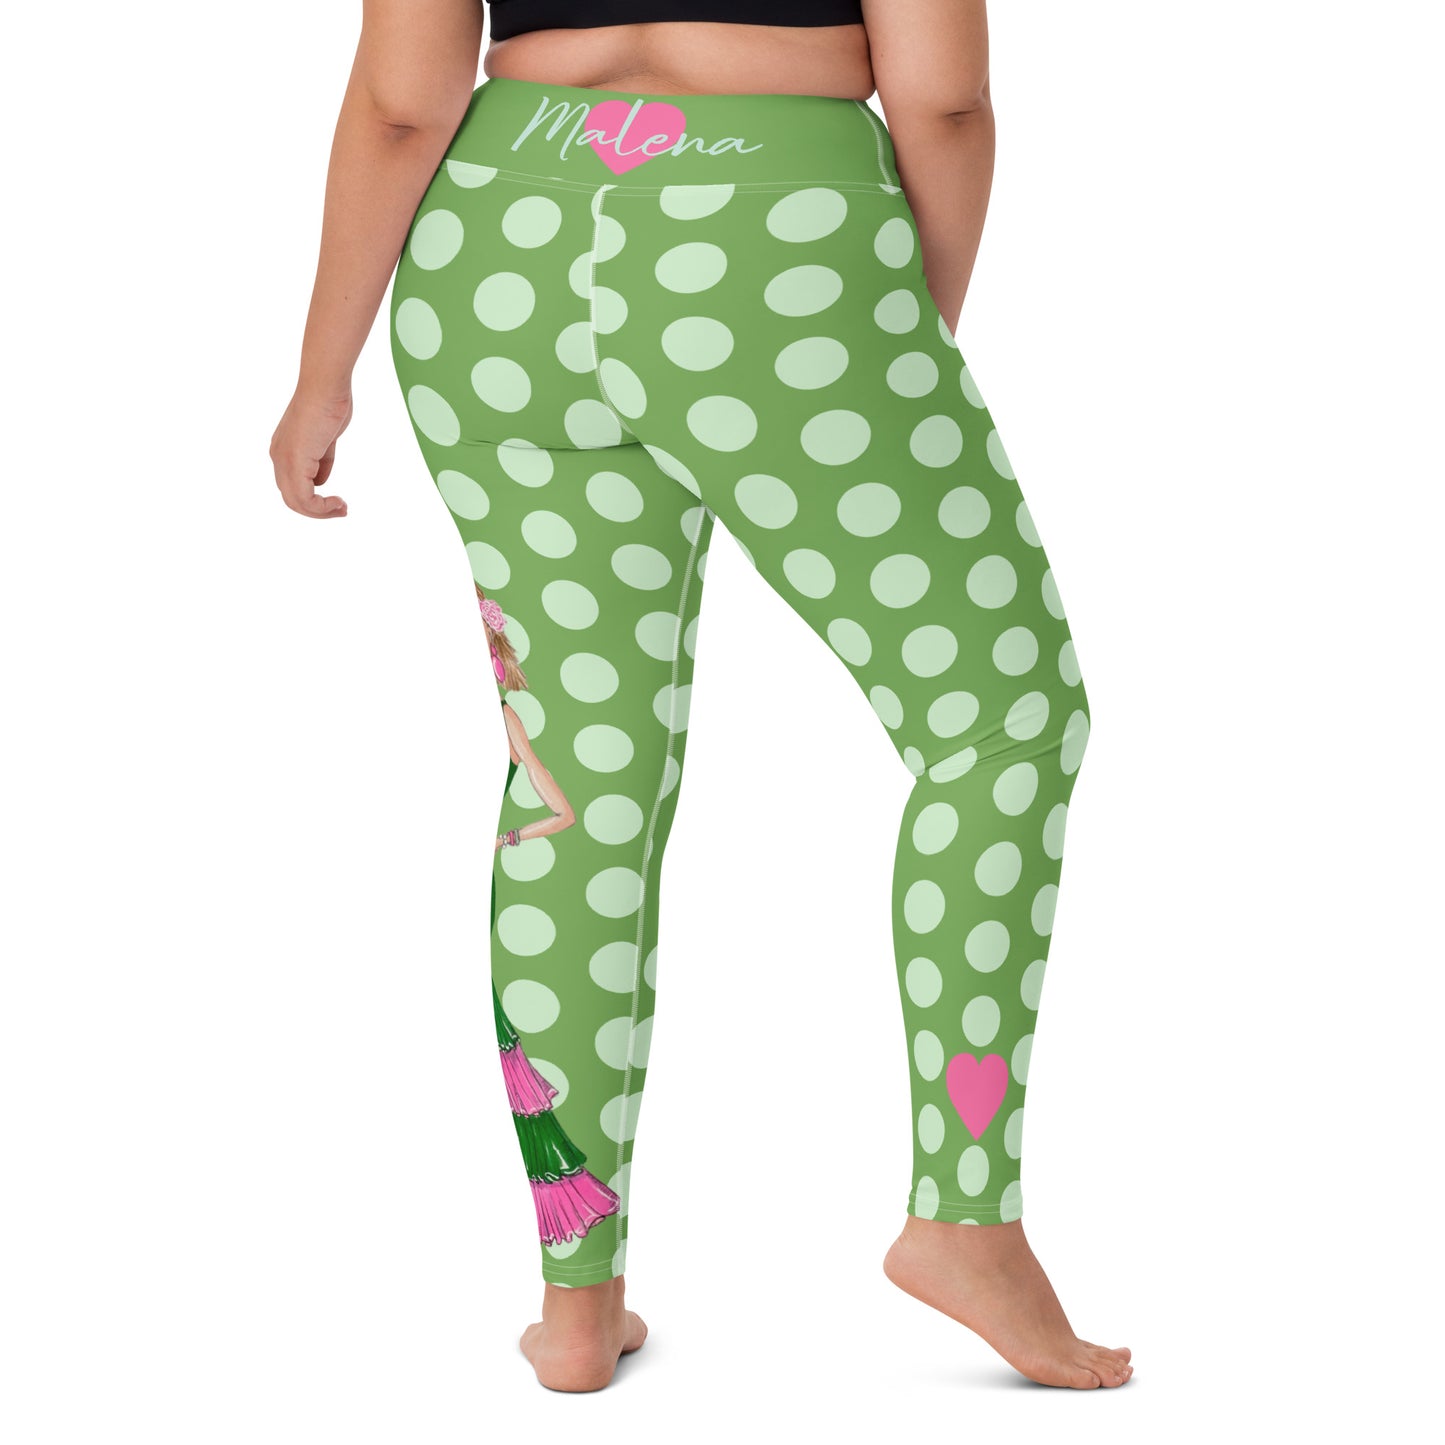 Flamenco Dancer Leggings, green high waisted yoga leggings with a green and pink dress design and green polka dots - IllustrArte